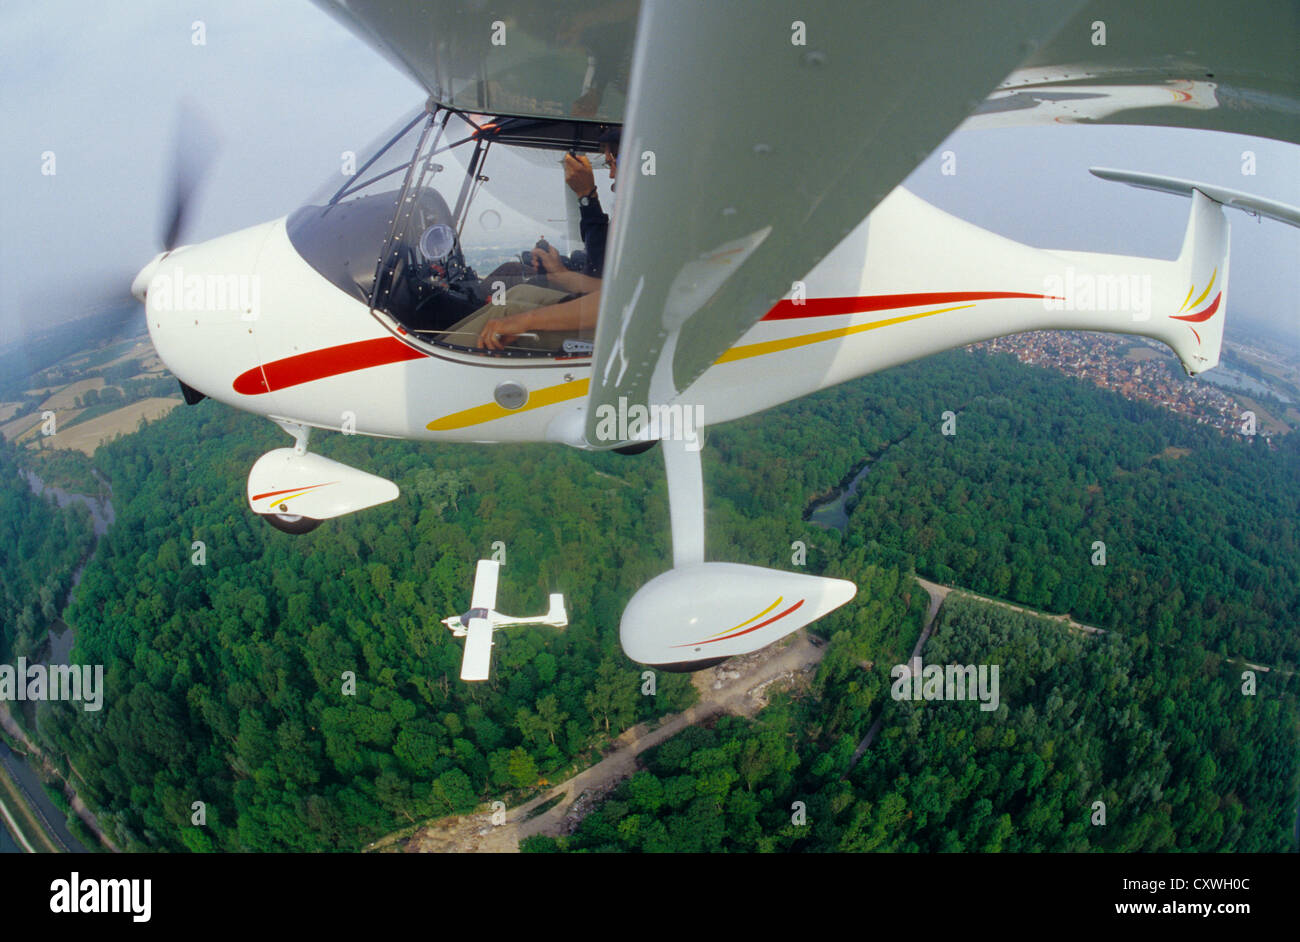 Two ultralight planes Allegro flying over Alsace region, France Stock Photo